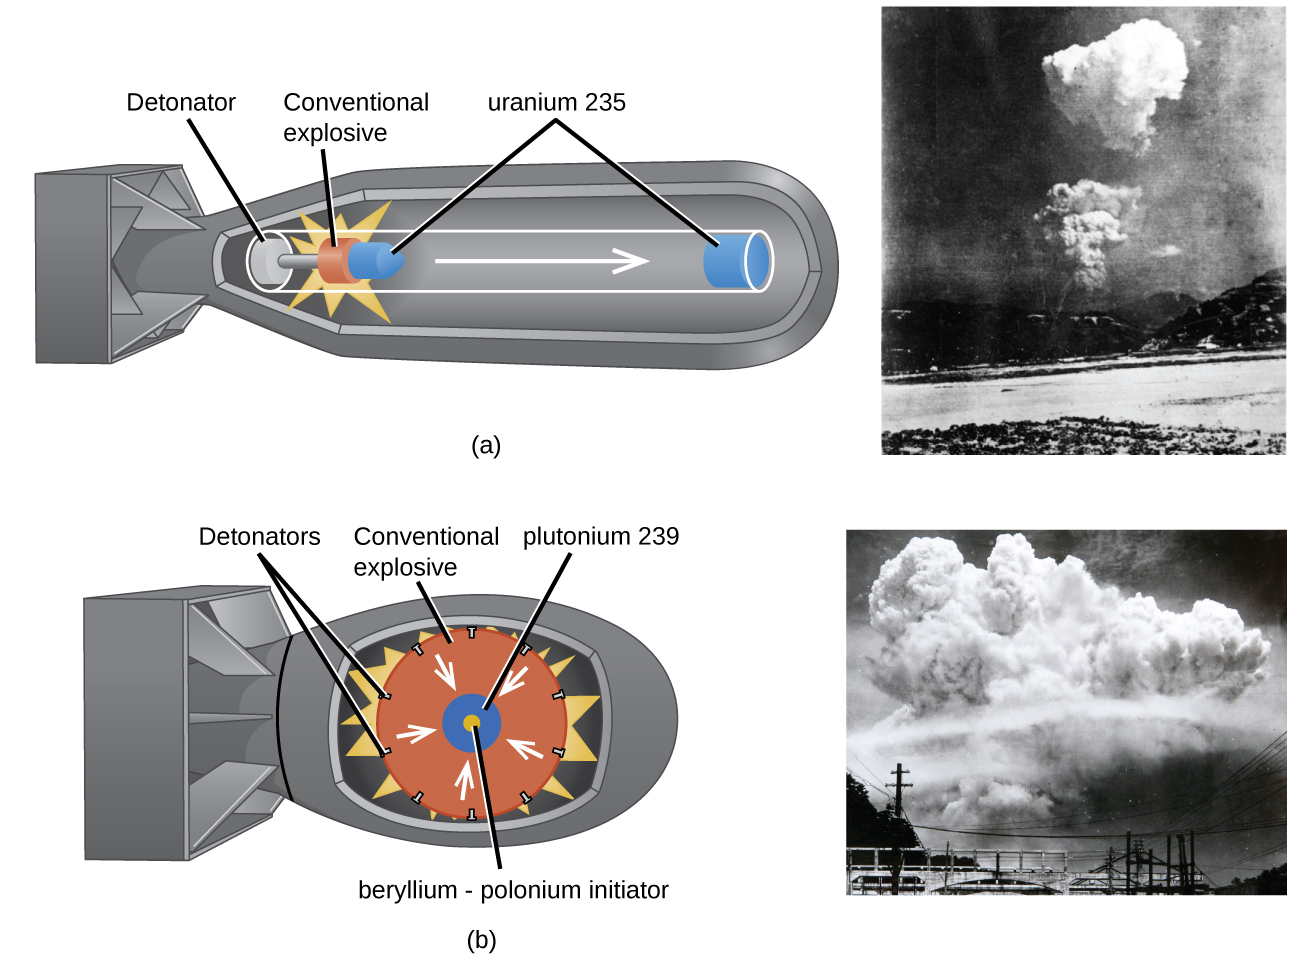 atomic bomb how it works